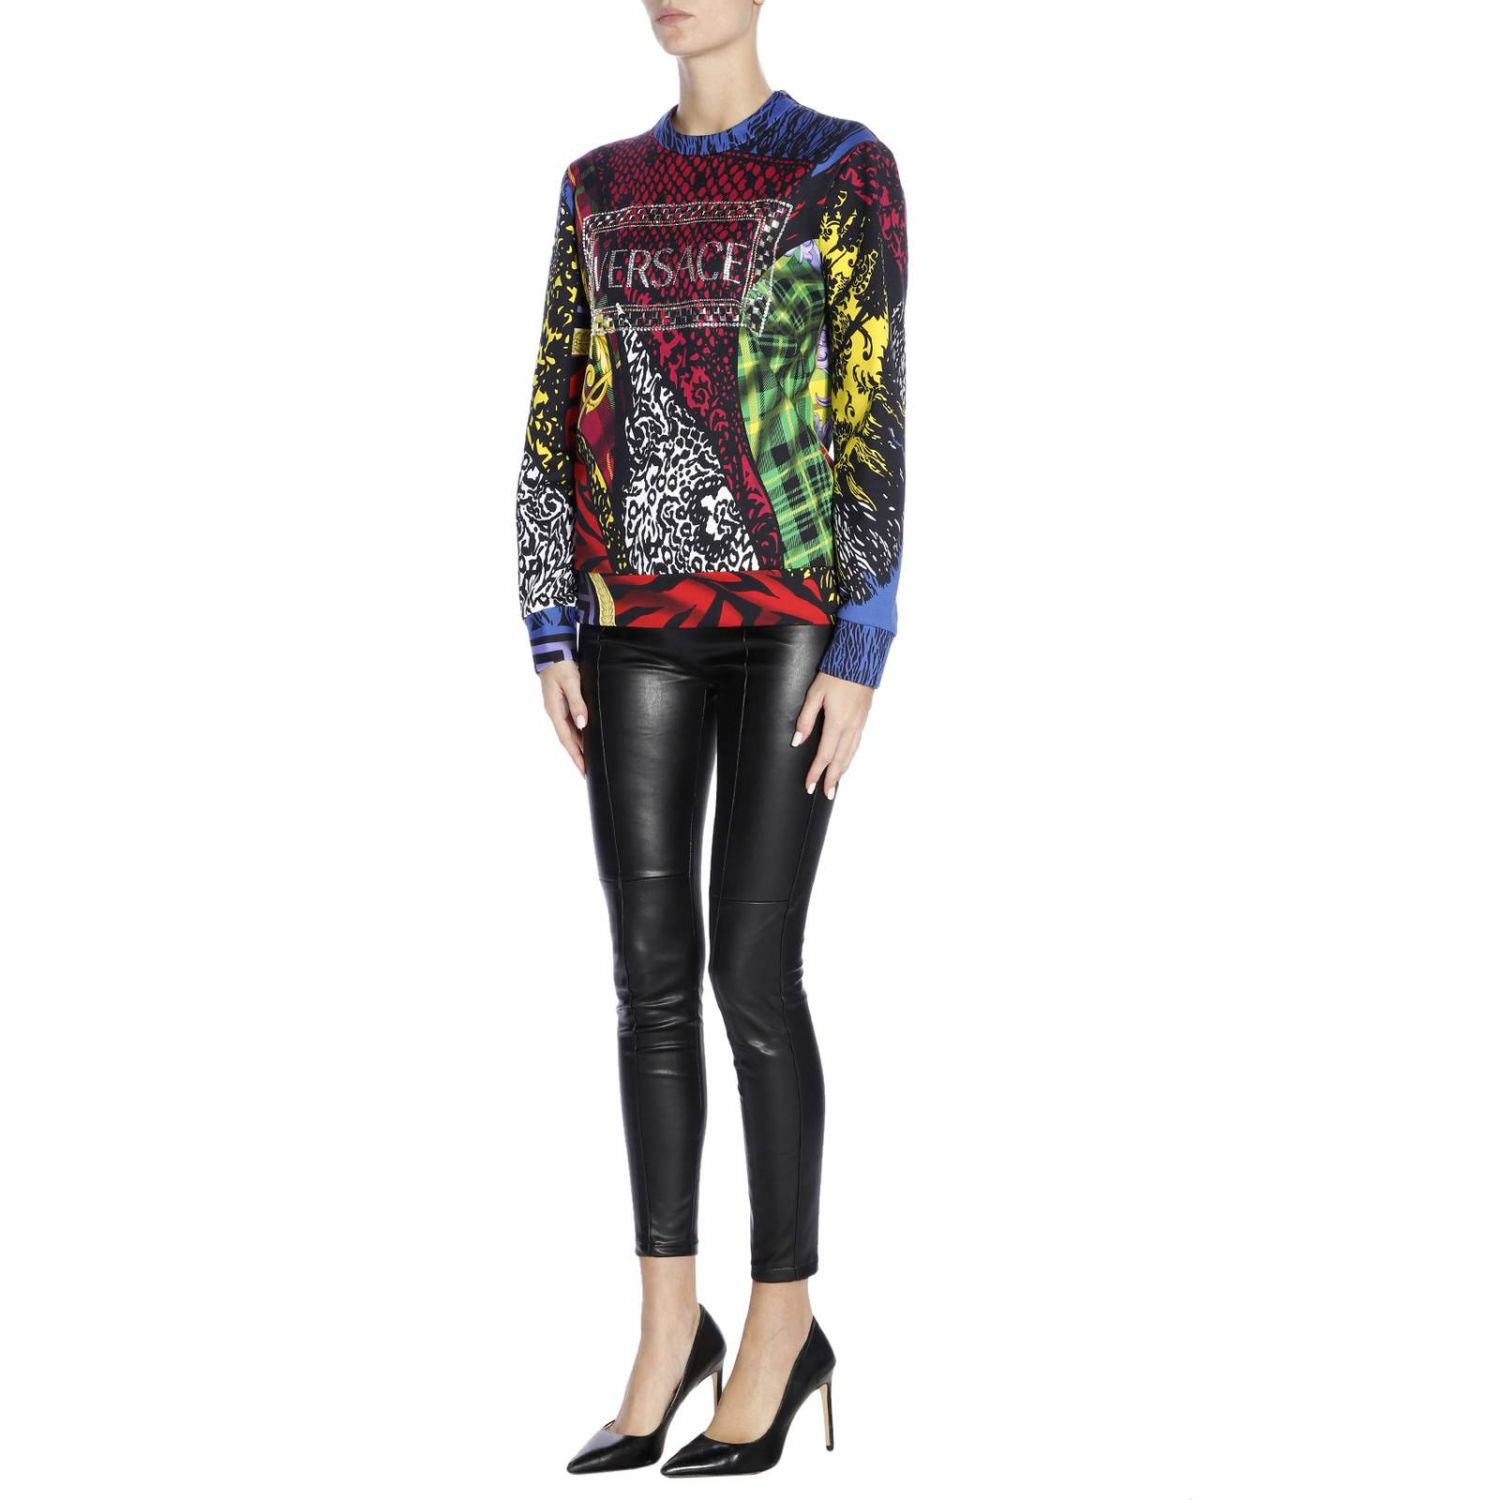 Versace Outlet: Sweater women - Multicolor | Sweater Versace A81389 ...